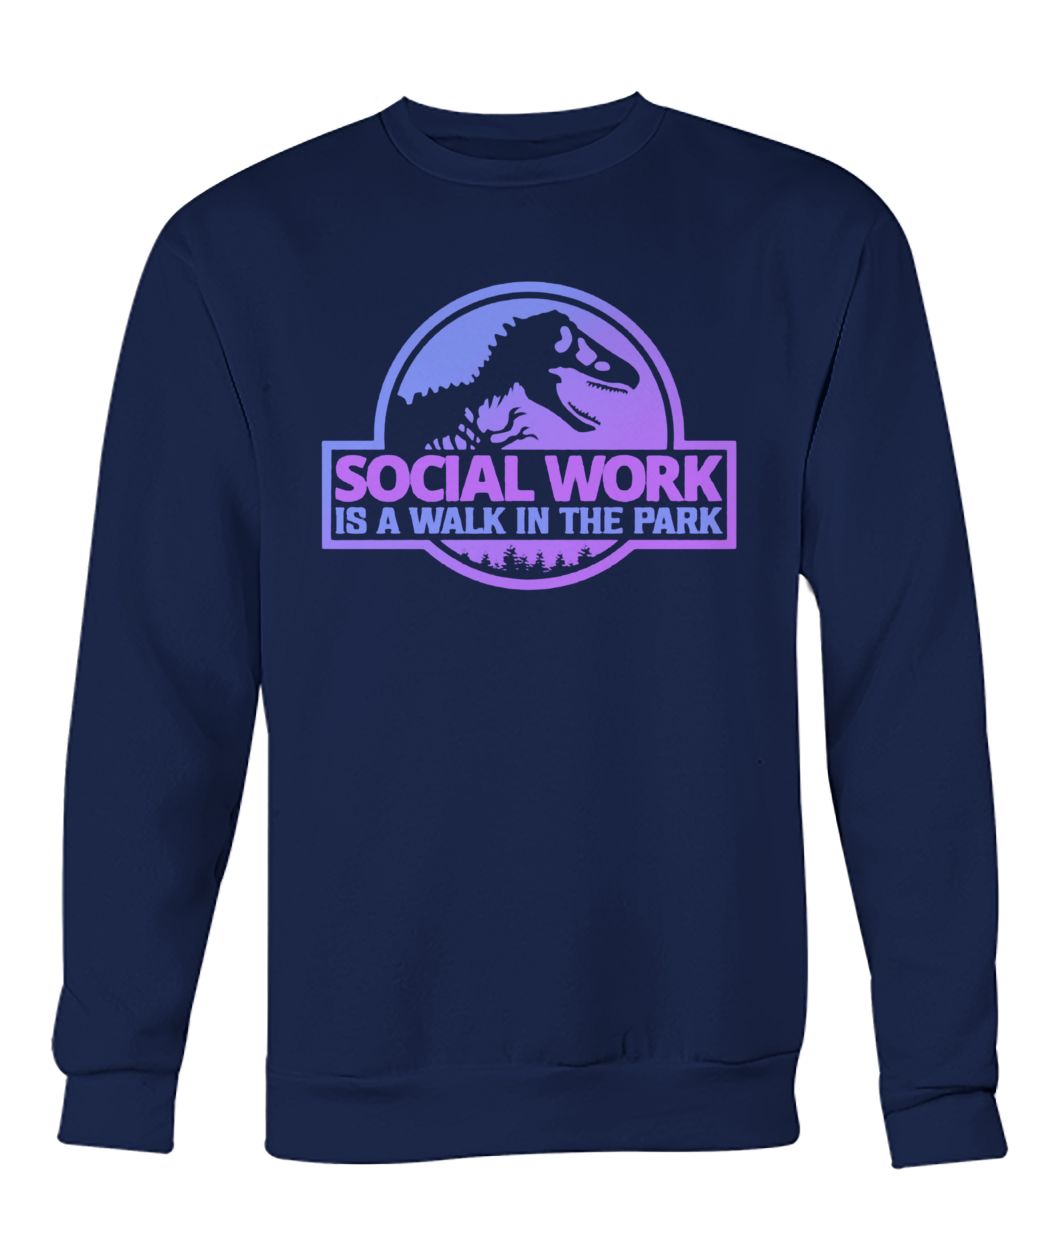 Jurassic social work is a walk in the park crew neck sweatshirt